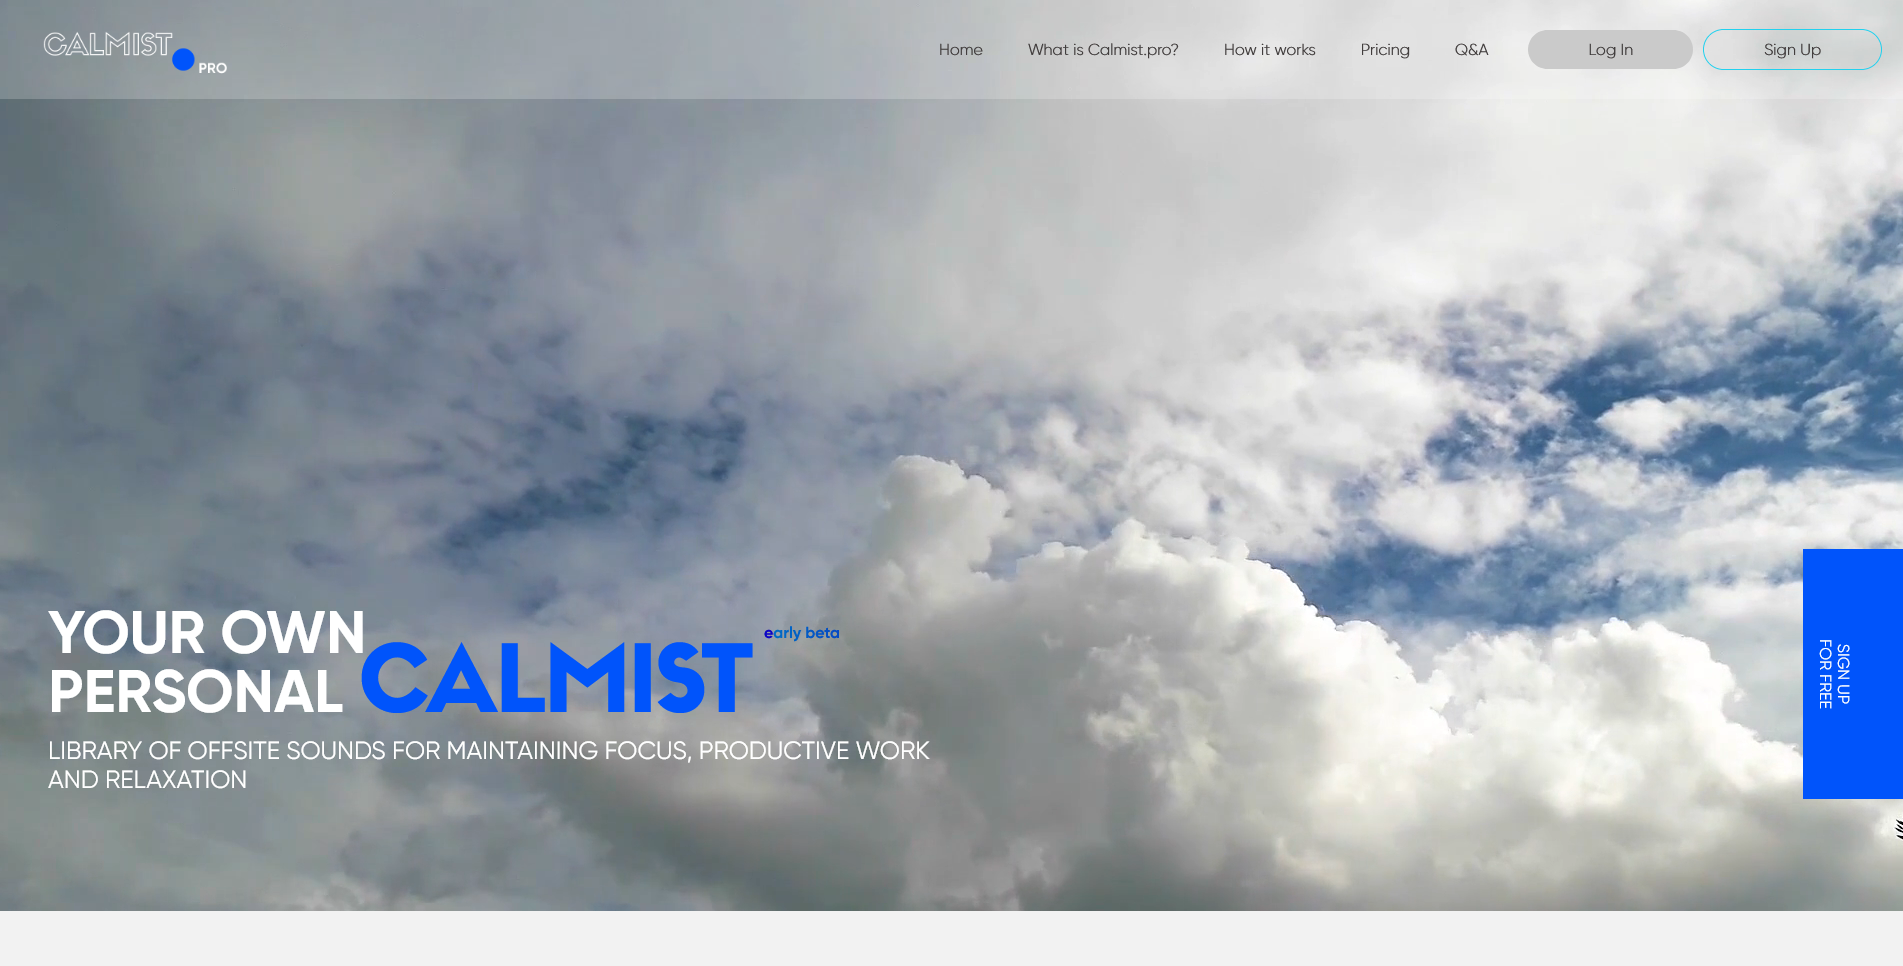 Find detailed information about Calmist.pro